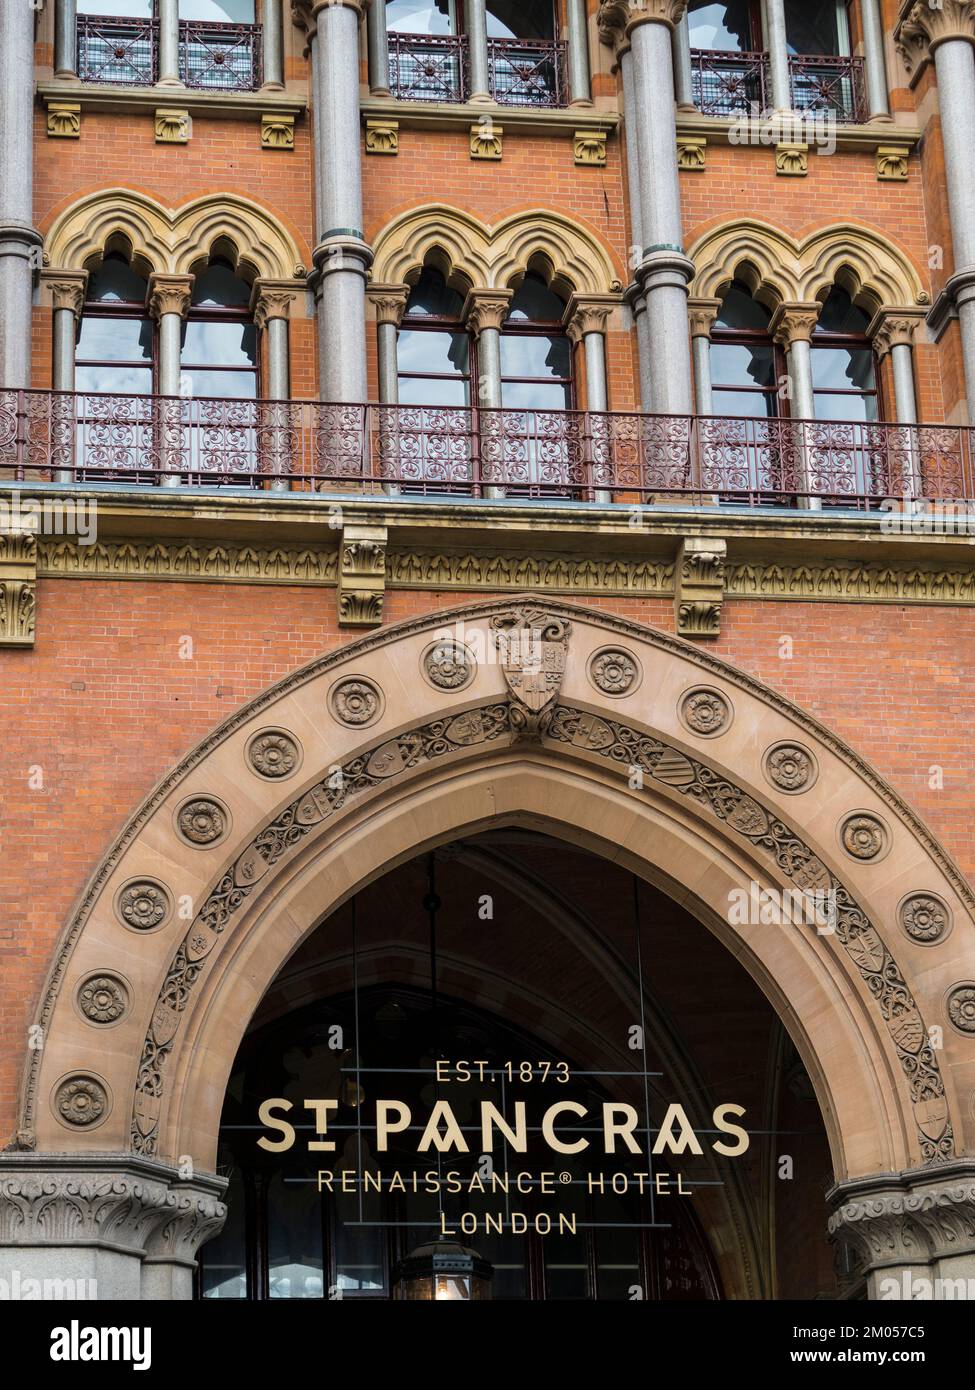 St Pancras, Renaissance Hotel, Euston Rd, Camden, London, England, UK, GB. Stock Photo